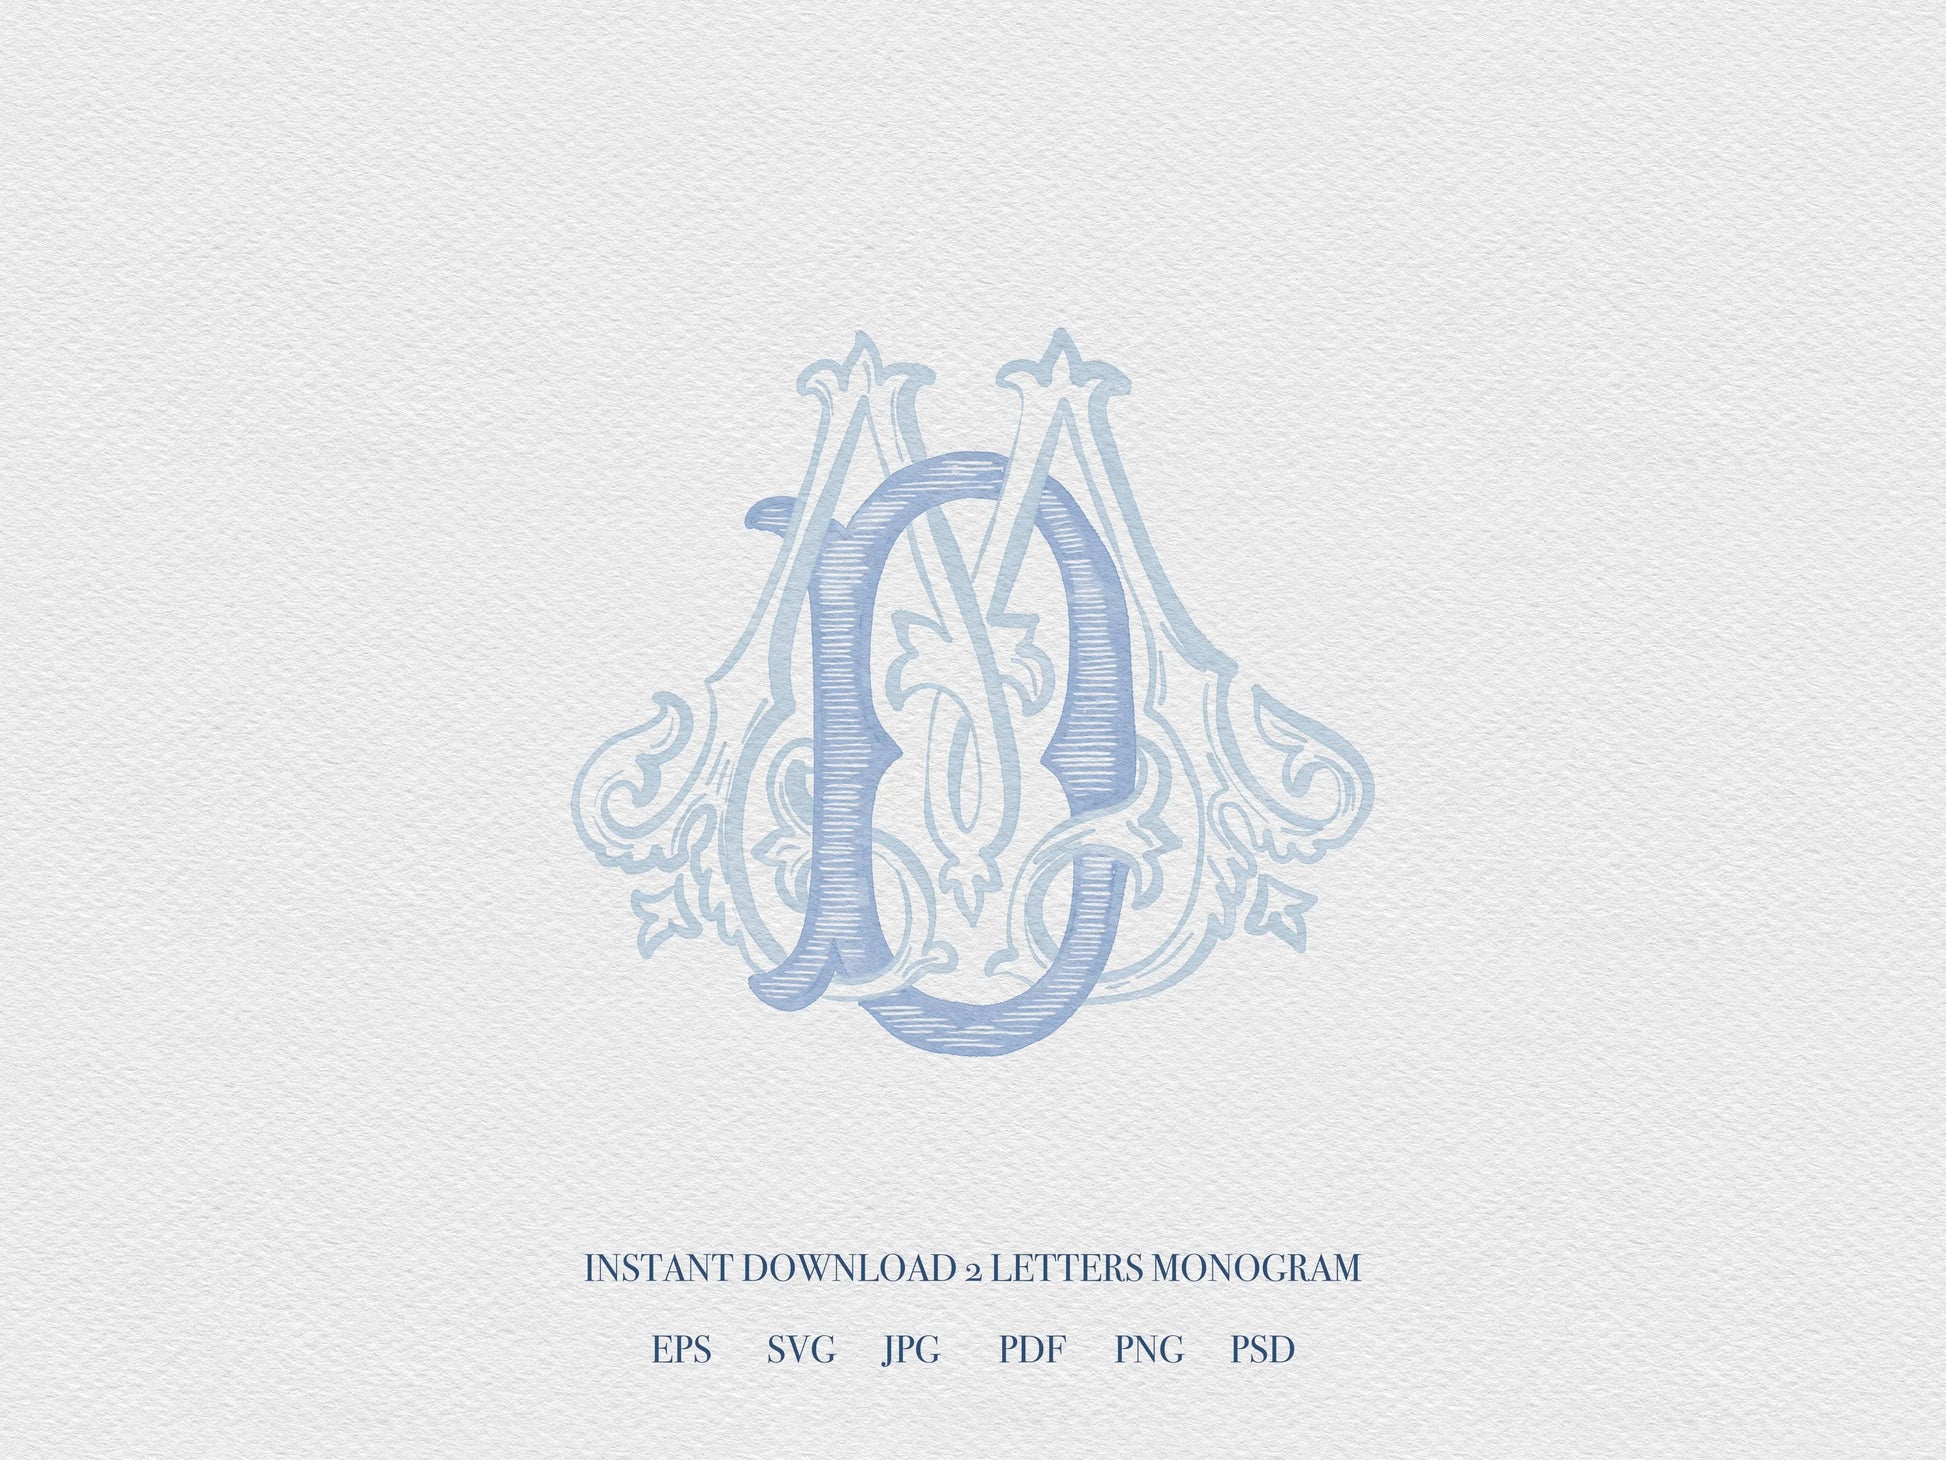 2 Letter Monogram with Letters DM | Digital Download - Wedding Monogram SVG, Personal Logo, Wedding Logo for Wedding Invitations The Wedding Crest Lab